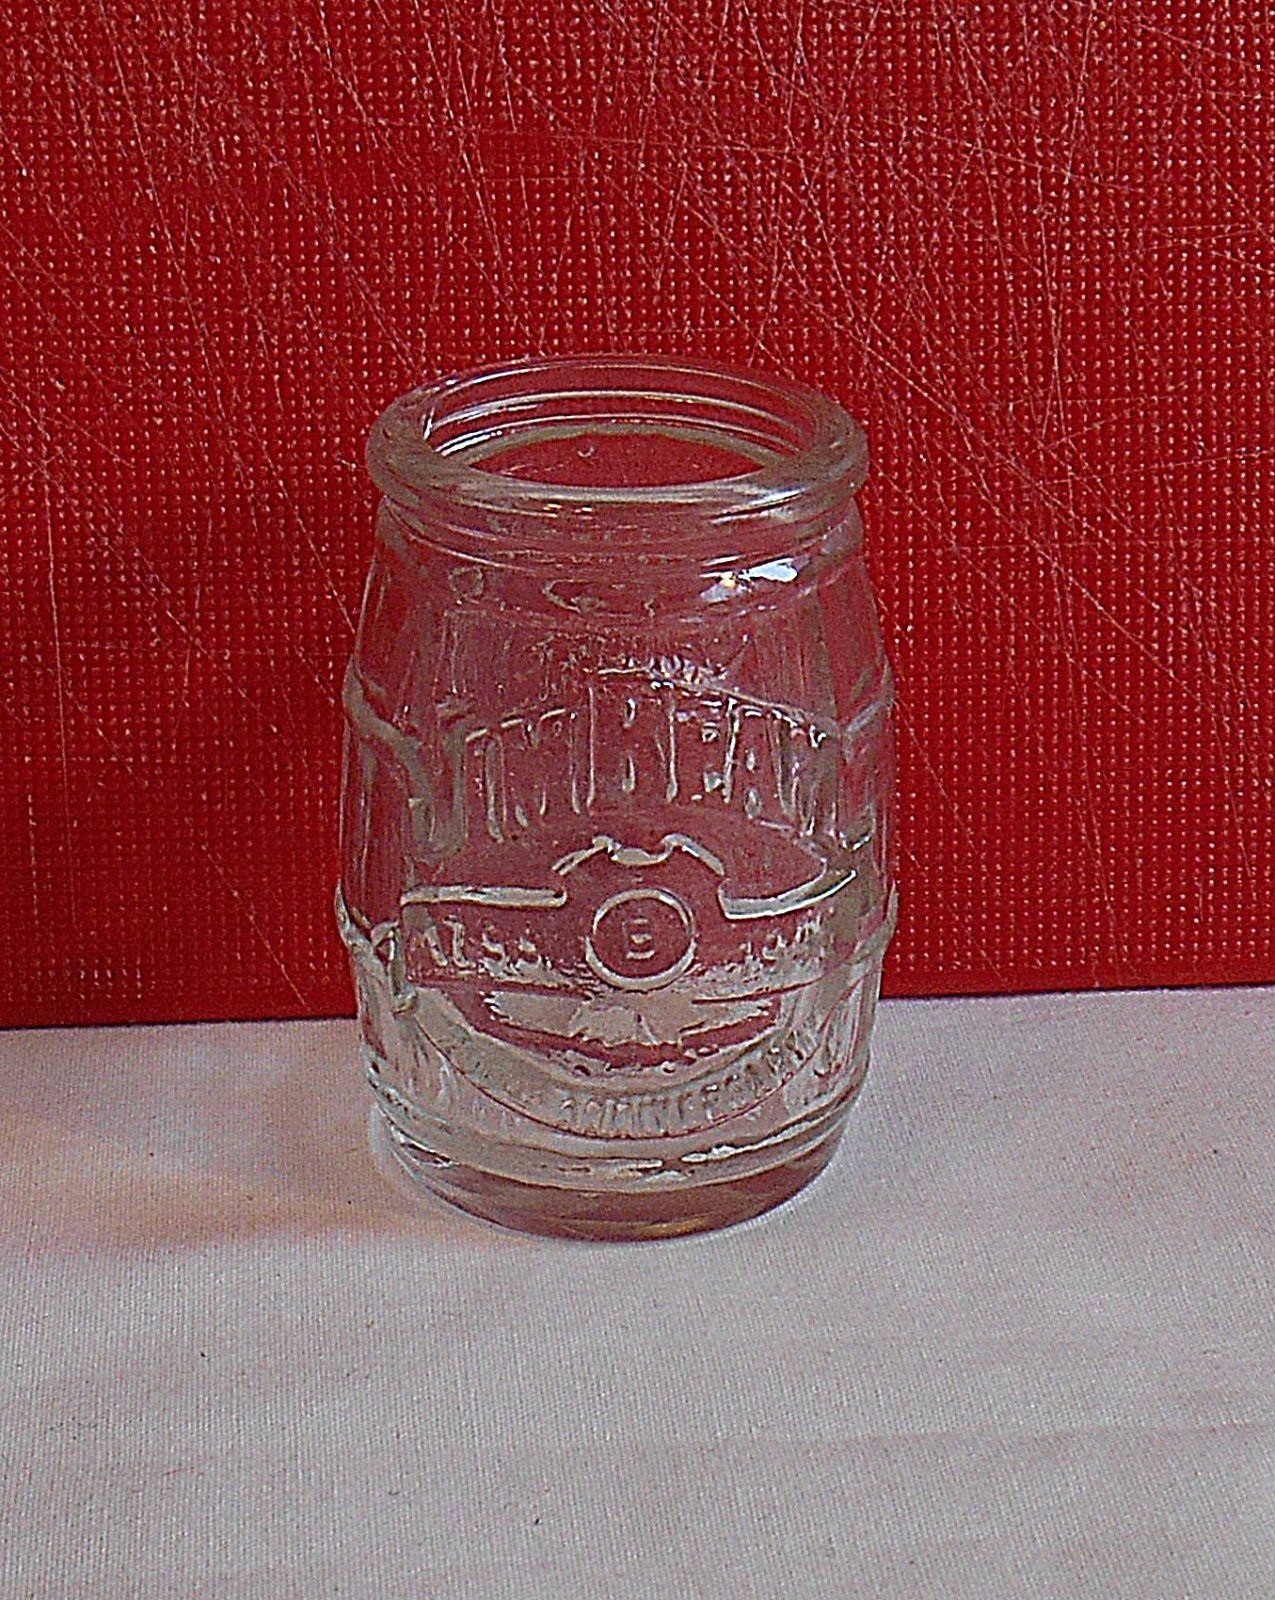 Jim Beam 200th Anniversary Mini Whiskey Barrel Shot Glass / Toothpick Holder - $3.99